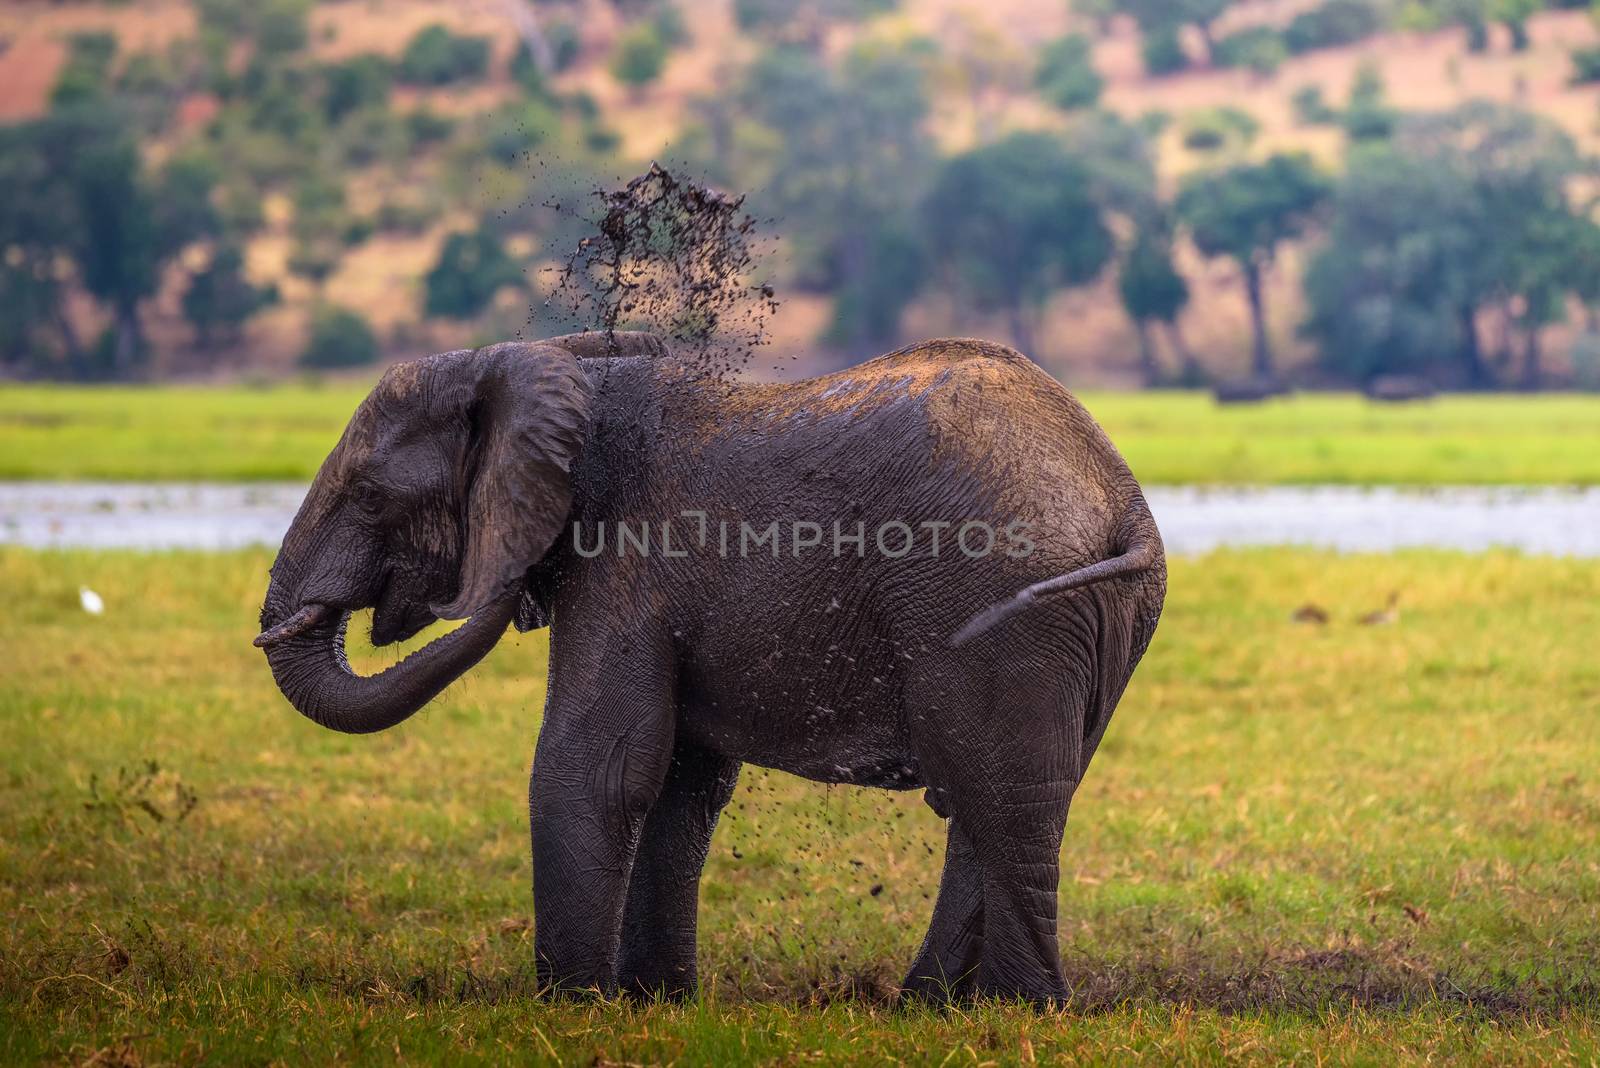 Elephant splashing mud with his trunk in Chobe National Park, Botswana by nickfox